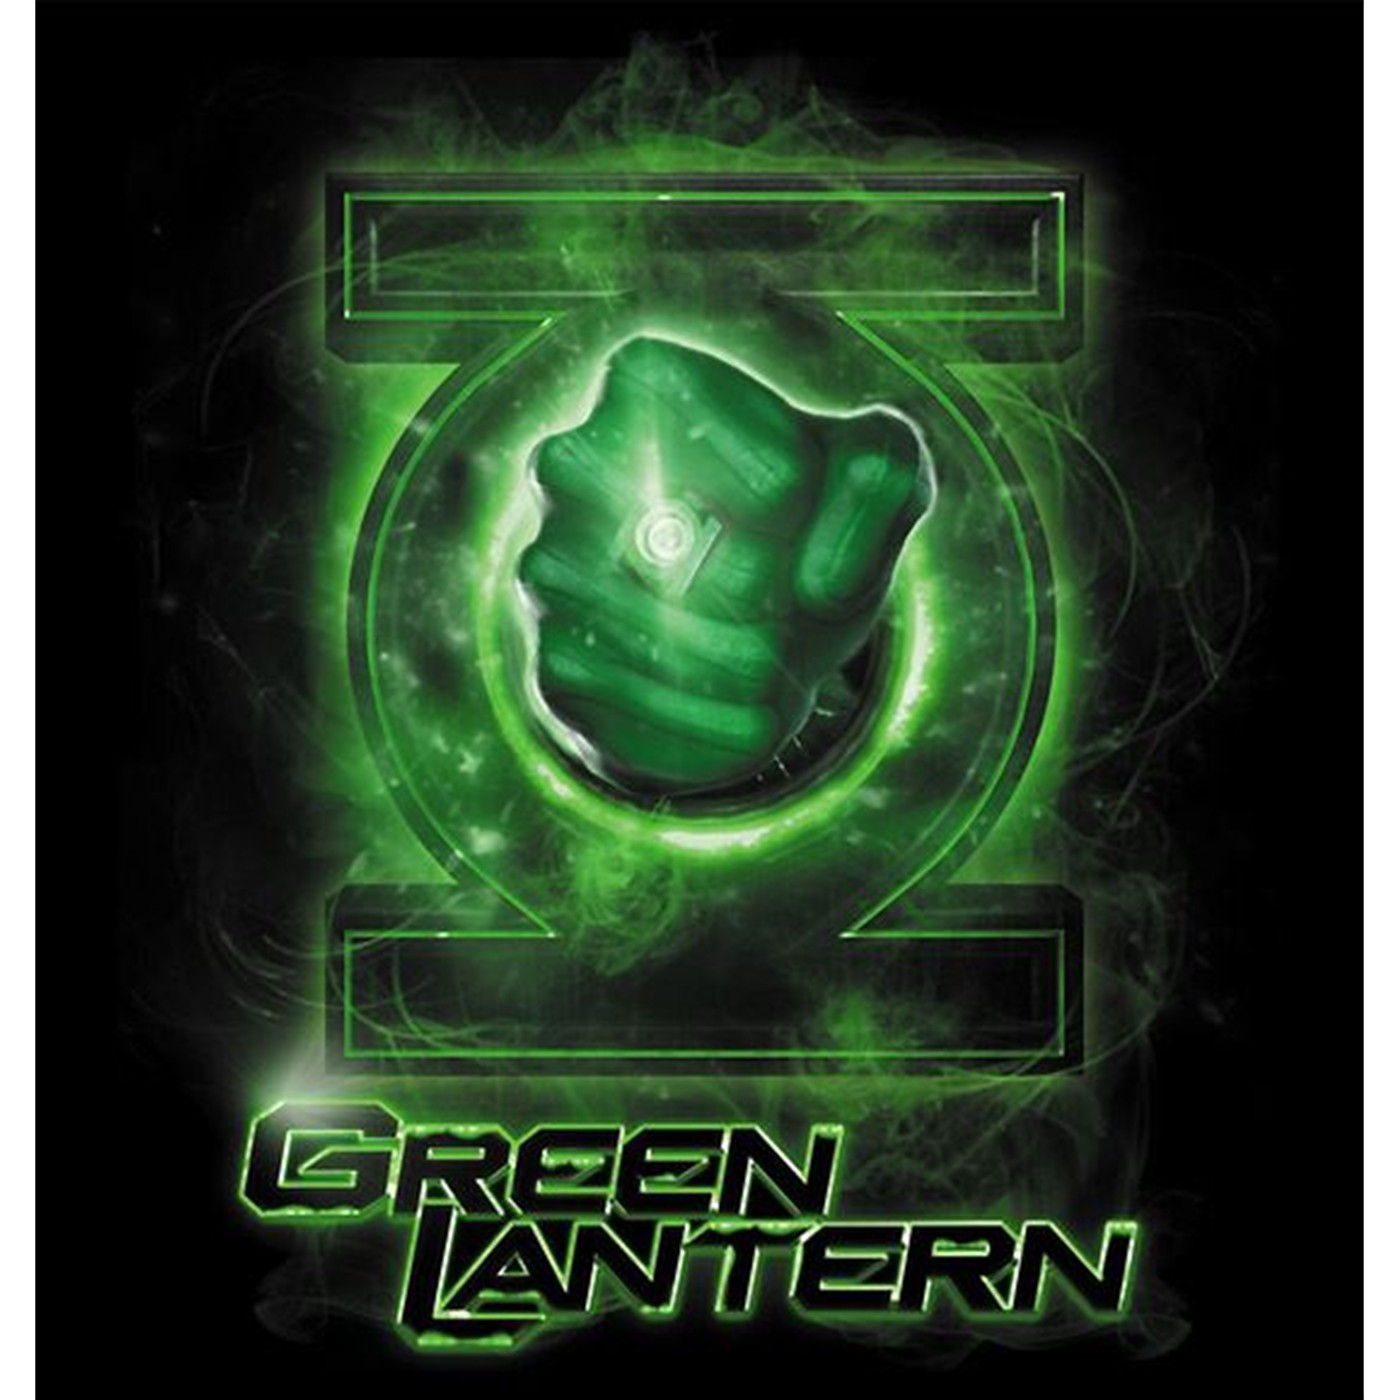 Green Lantern Movie Fist Symbol T-Shirt